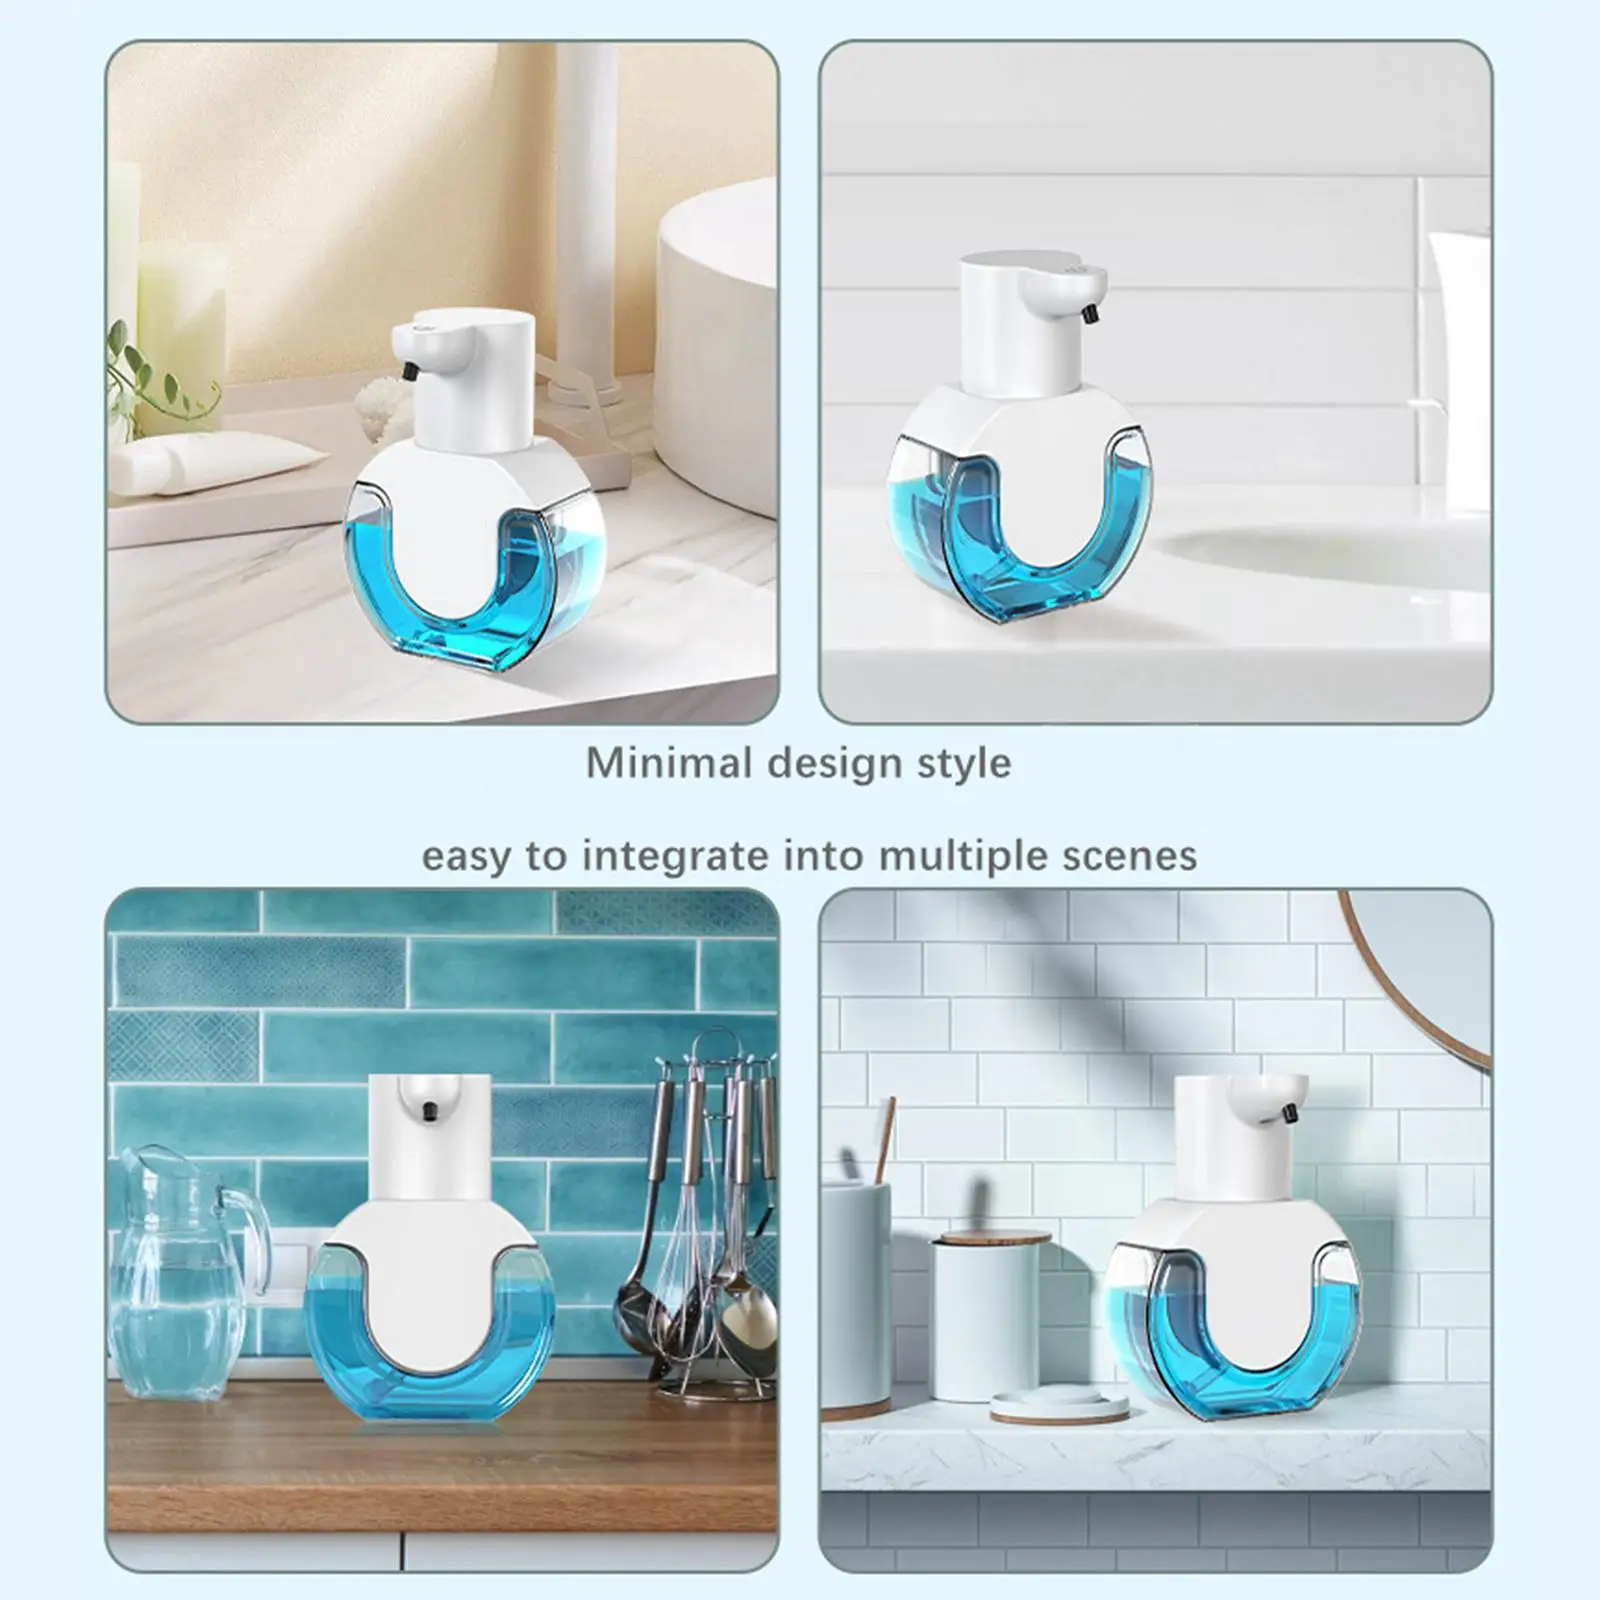 Foam Soap Dispenser Rechargeable Adjustable Hand Wash Machine for Restaurant